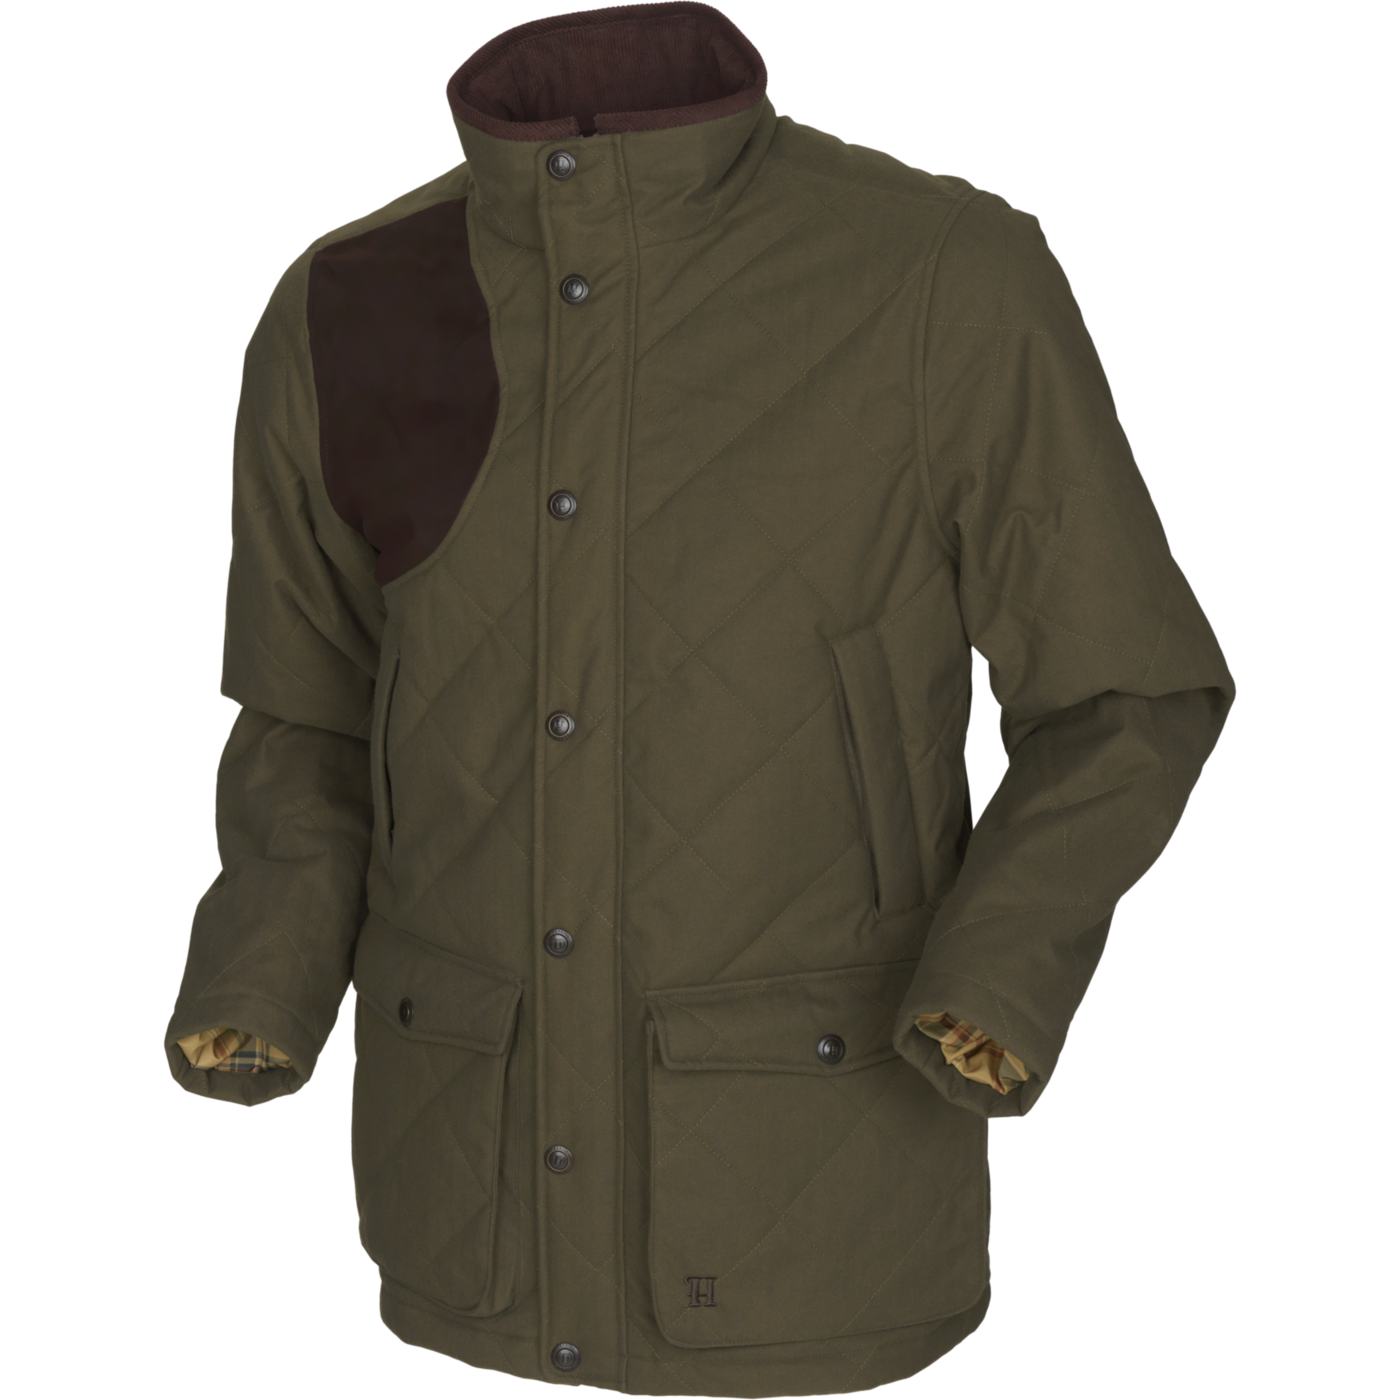 Westfield quilt jacket - Looqa